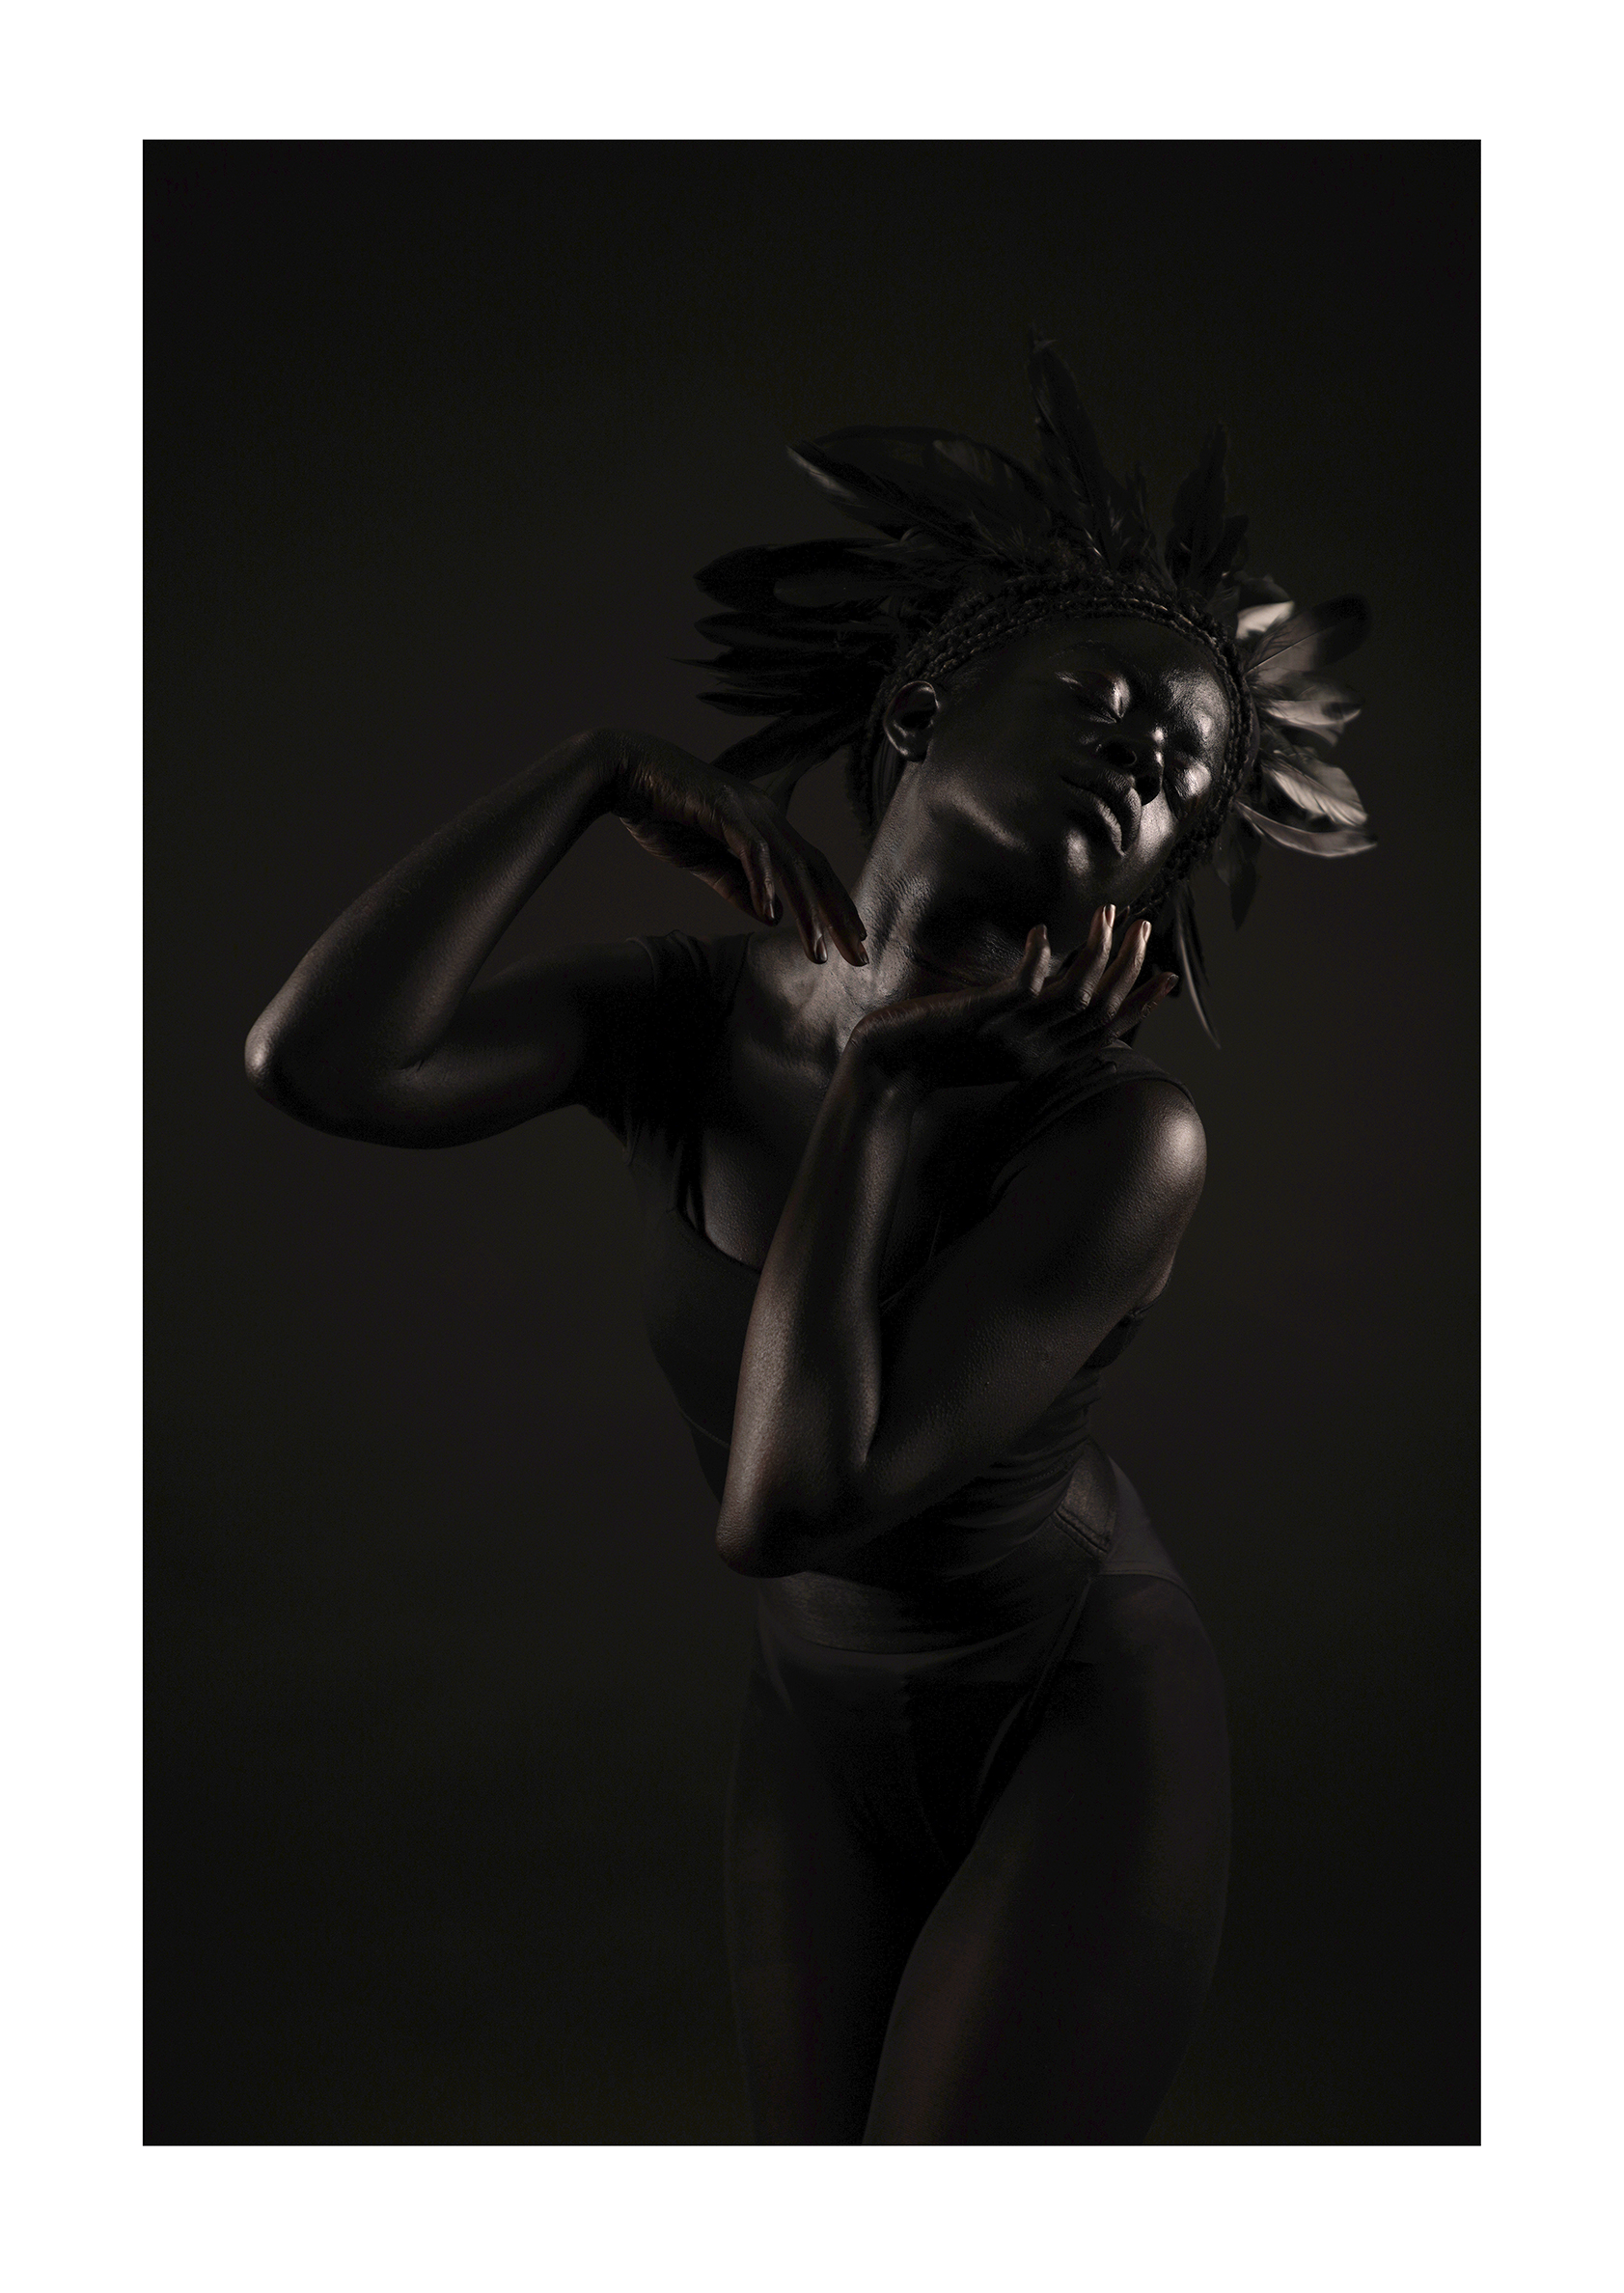 Image of Nyama Yake (The Black Aspect) by Sekai Machache